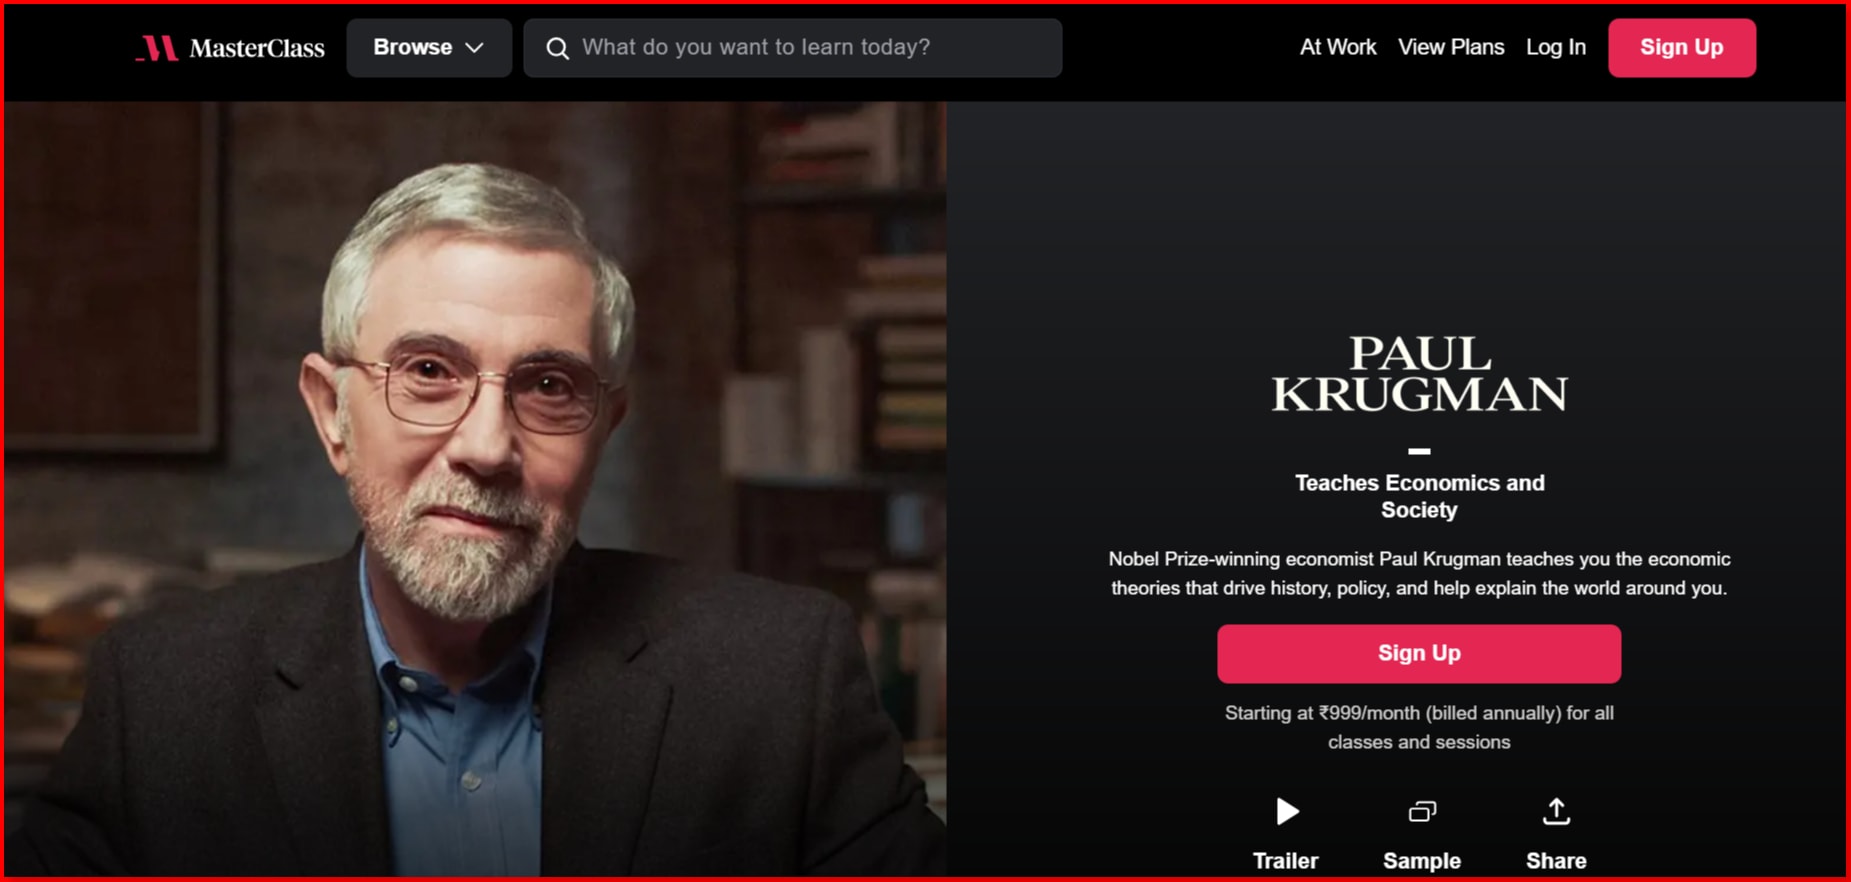 Paul-Krugman-Teaches-Economics-and-Society-Masterclass